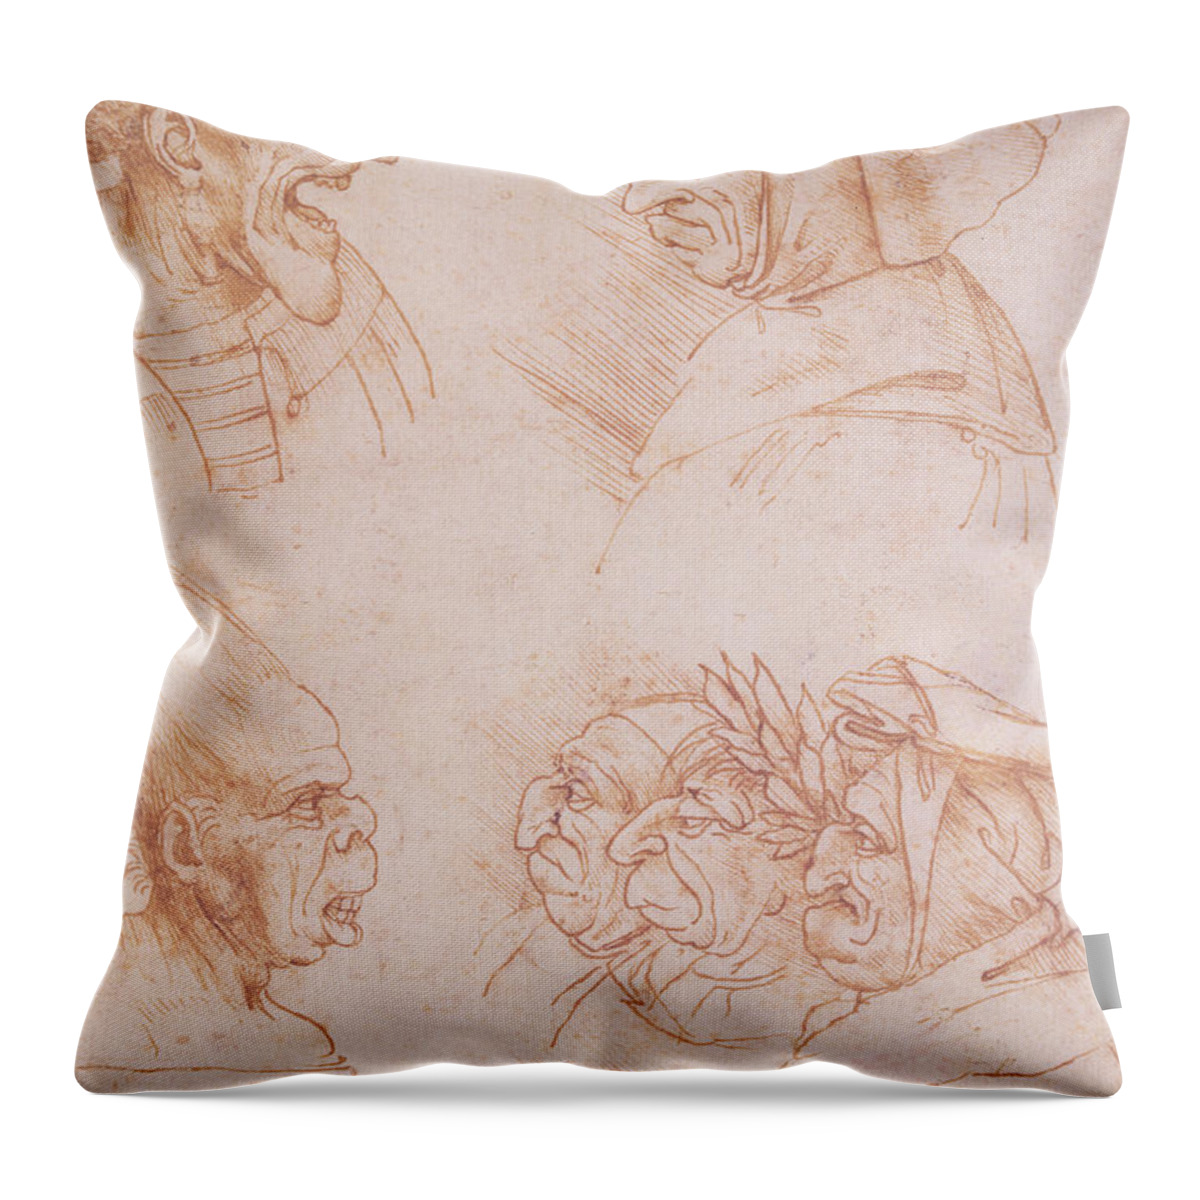 Renaissance Throw Pillow featuring the drawing Seven Studies of Grotesque Faces by Leonardo da Vinci